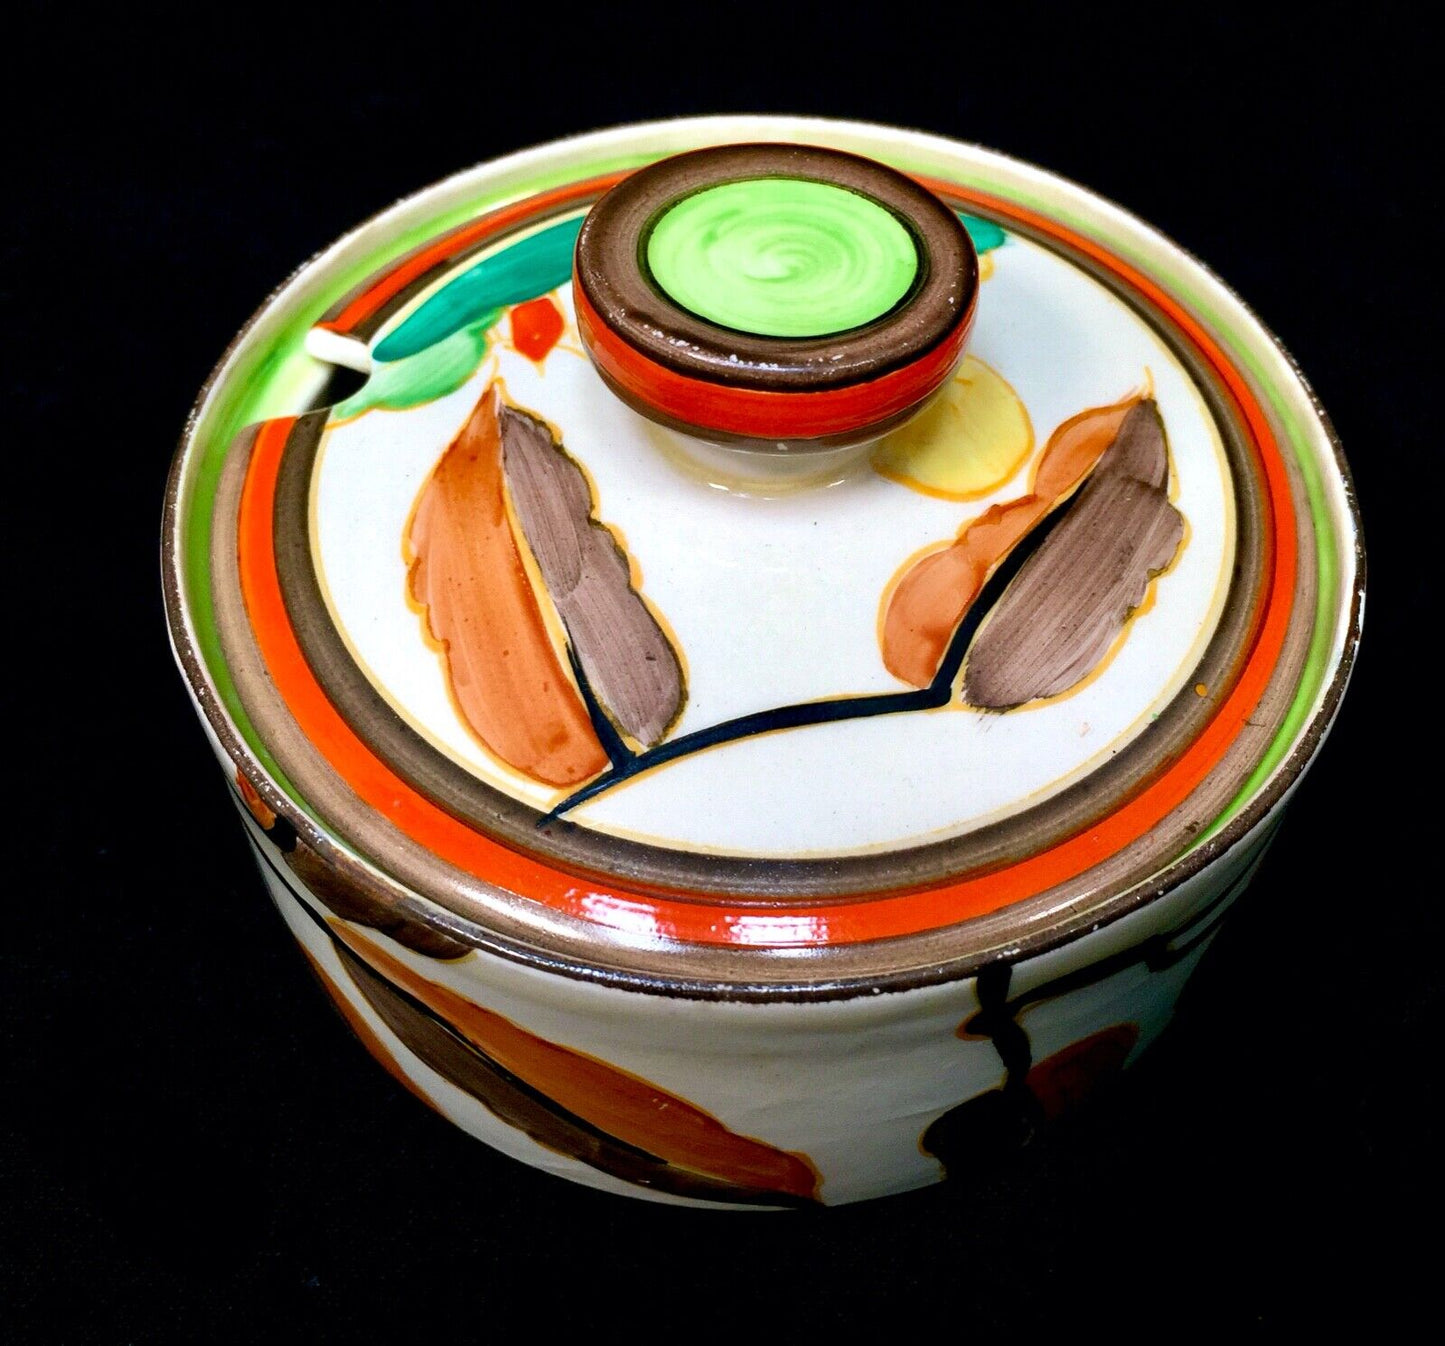 Clarice Cliff Bizarre Green Alton Jam / Preserve Pot / Art Deco Pottery / c.1933